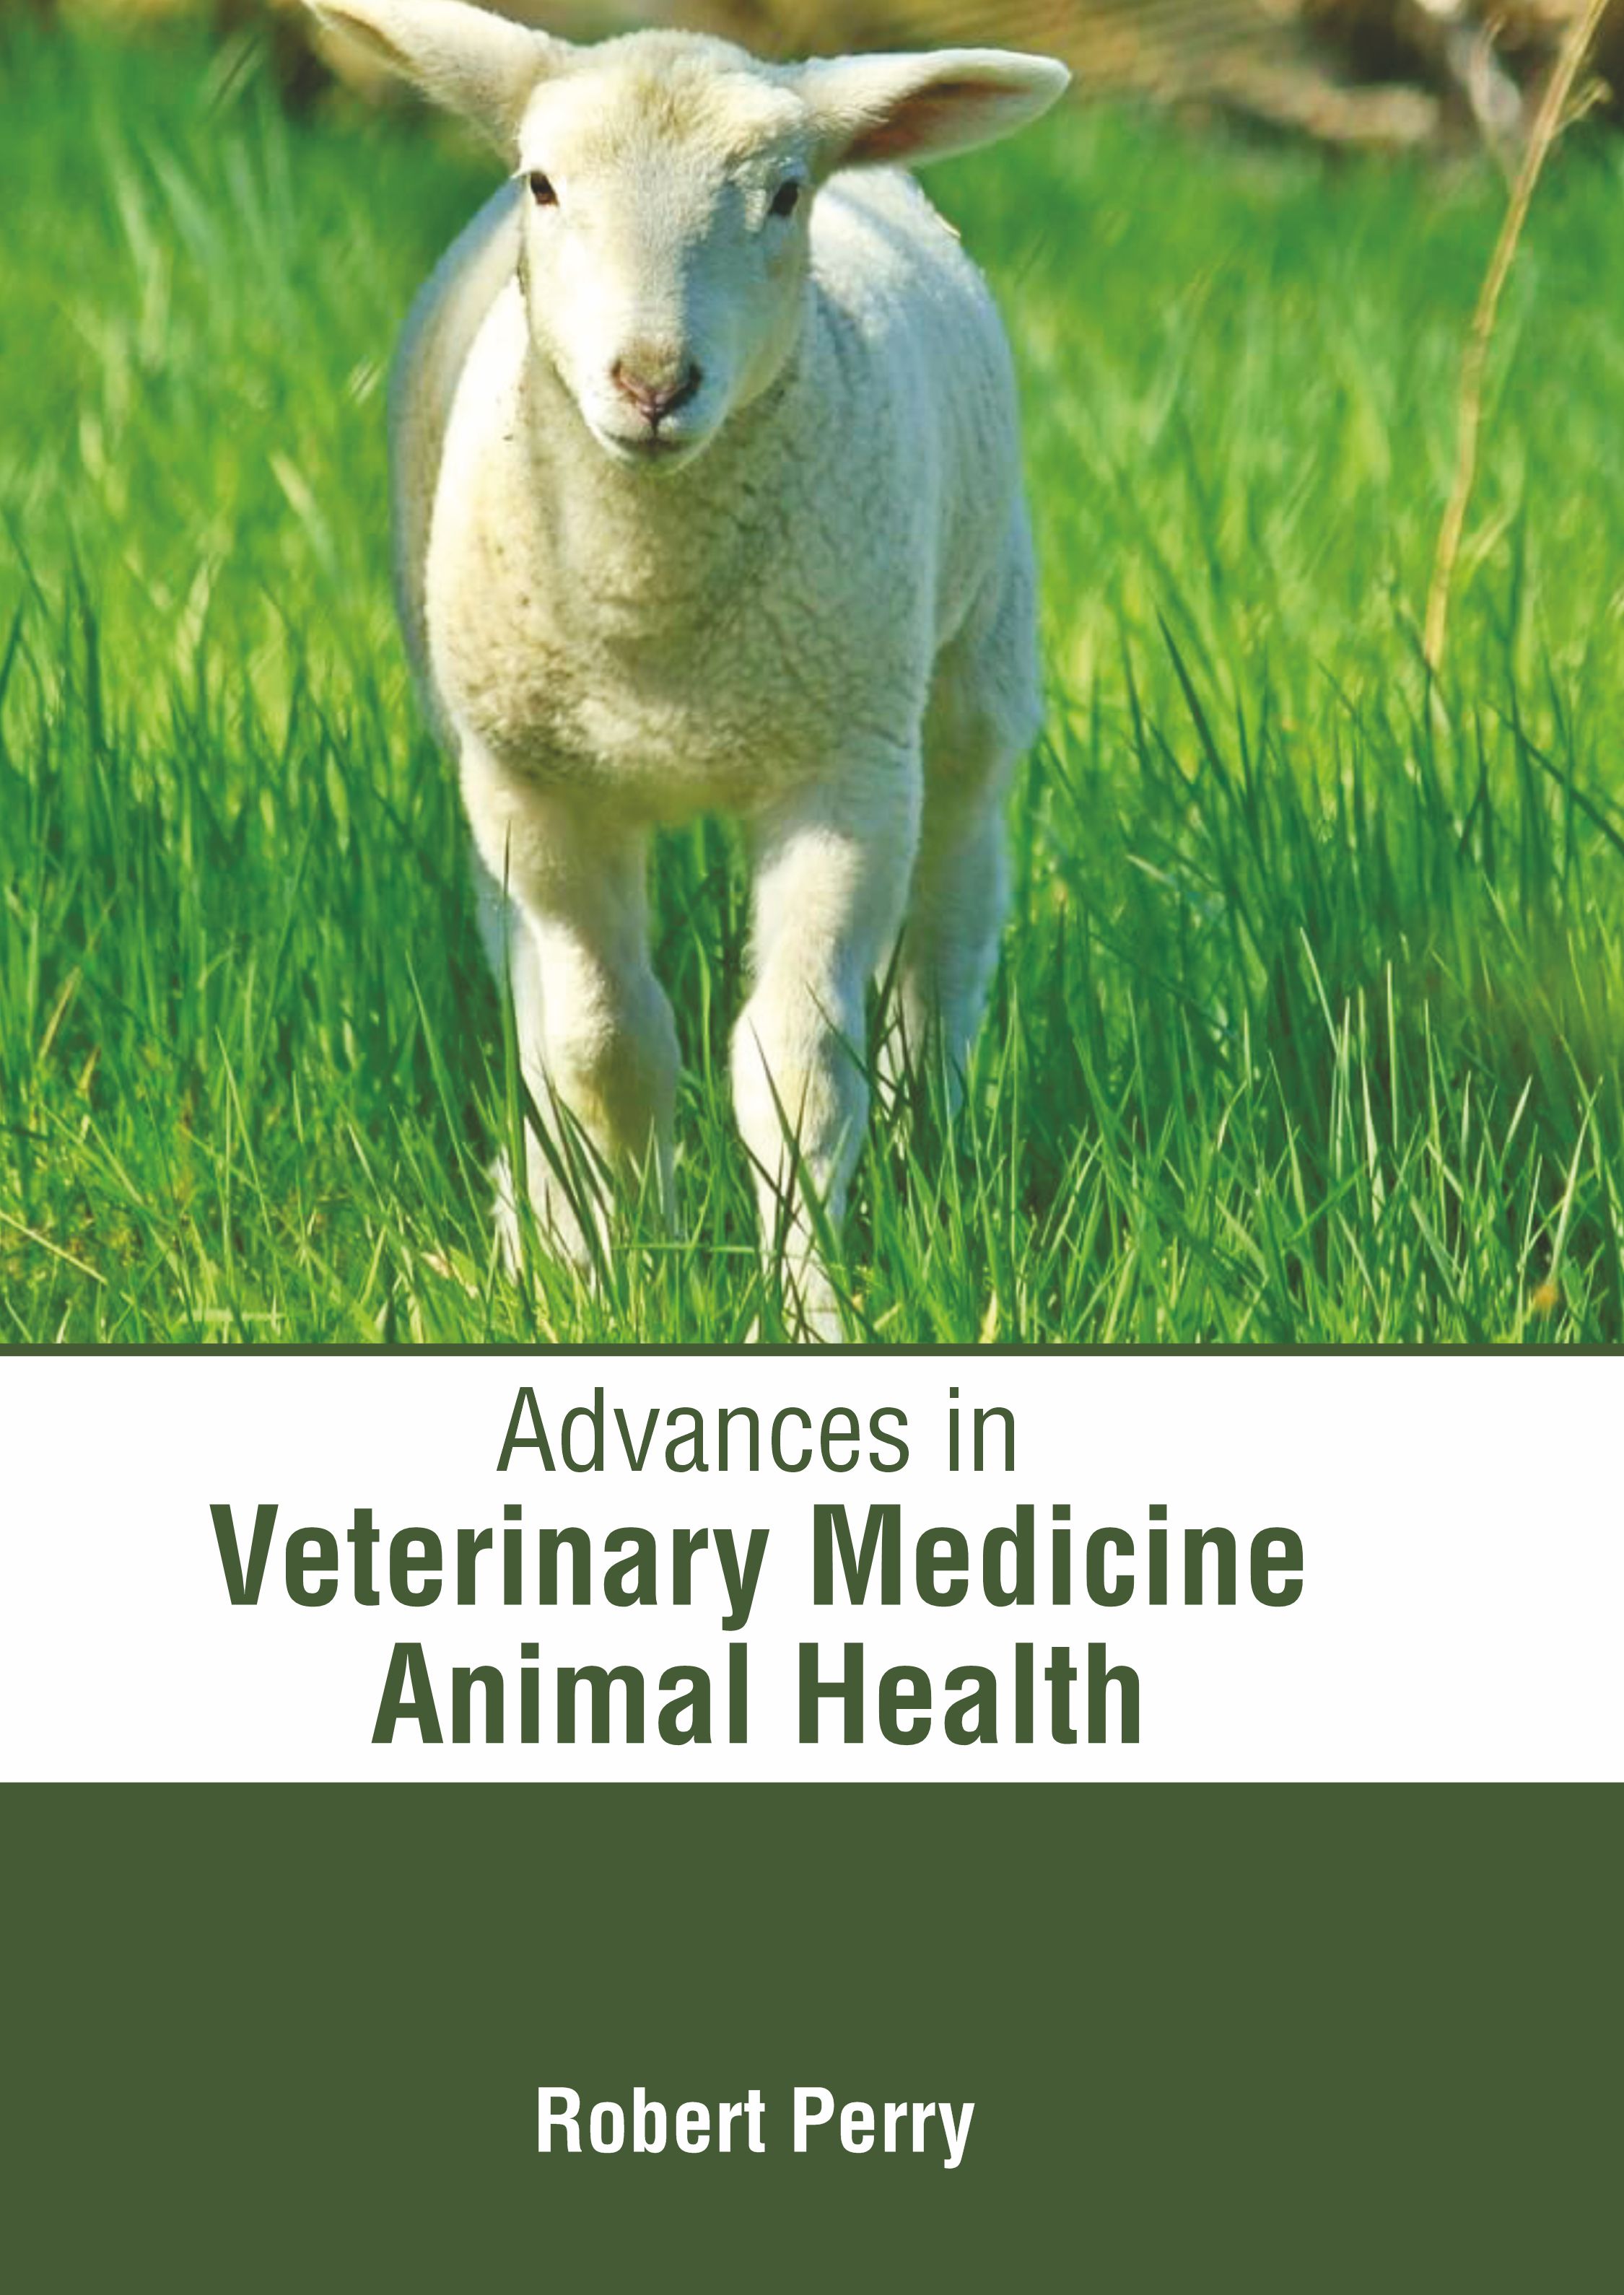 

medical-reference-books/veterinary/advances-in-veterinary-medicine-animal-health-9781639275182